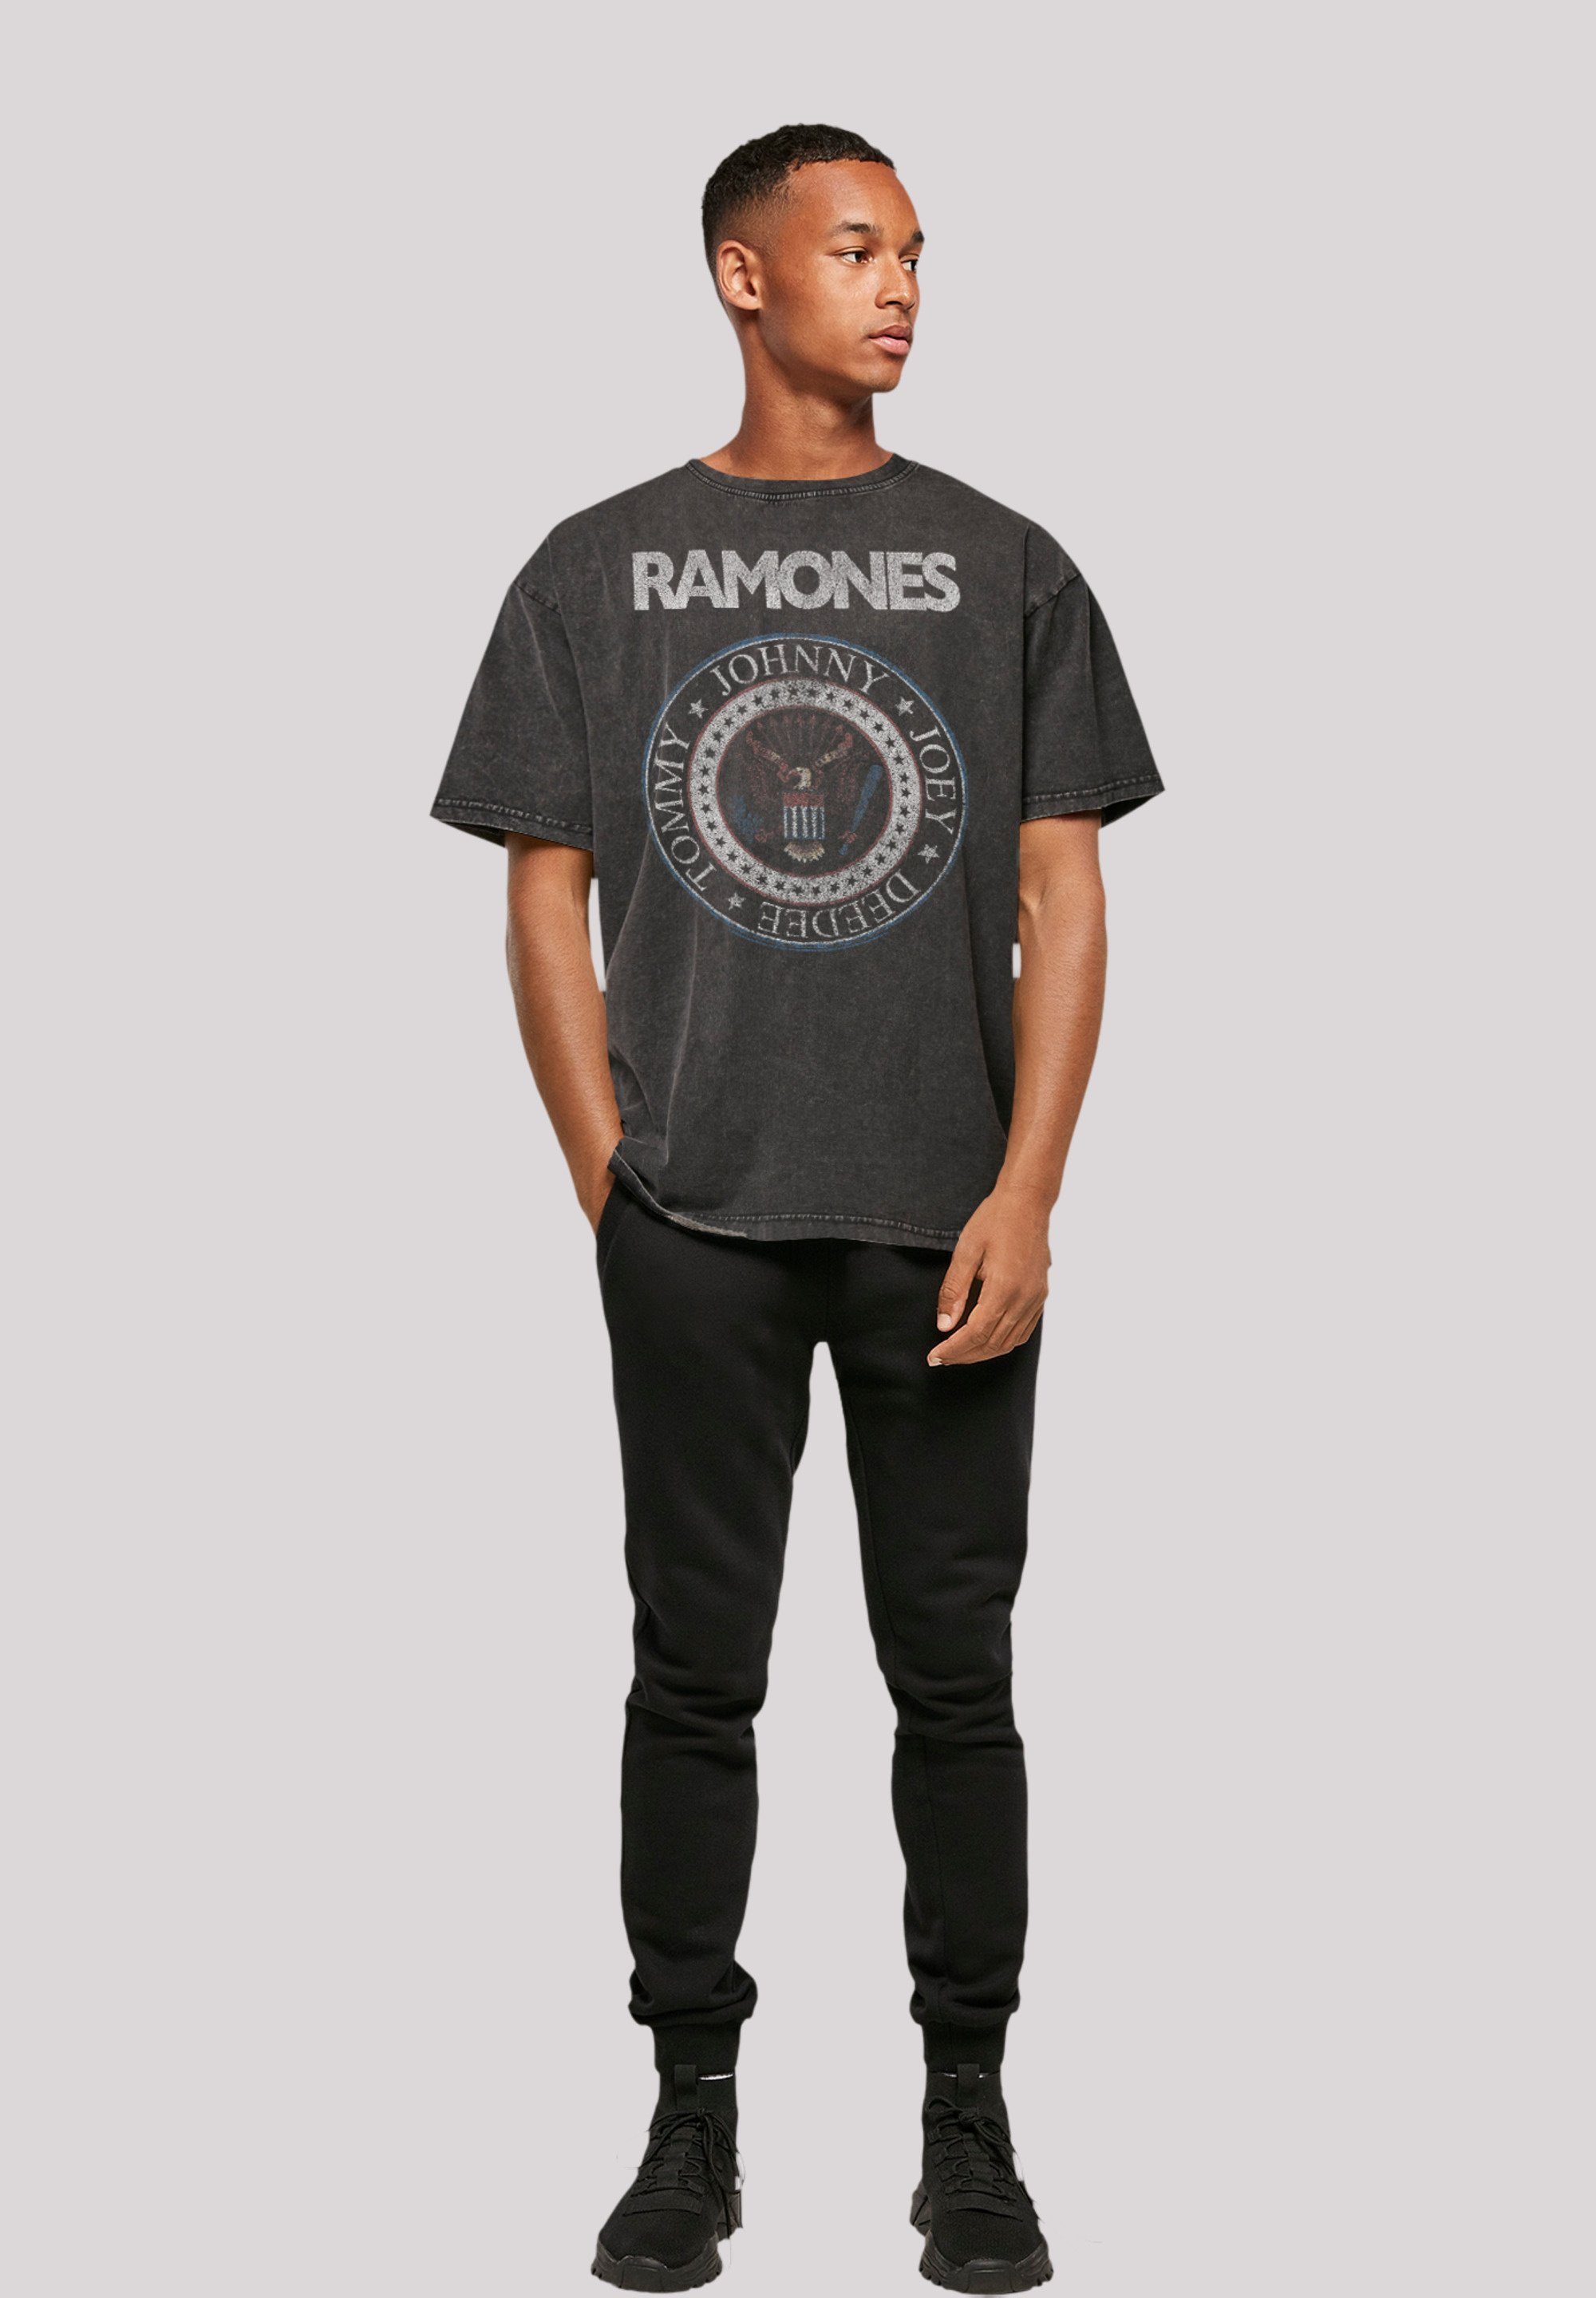 F4NT4STIC T-Shirt Ramones Rock Musik Band, Red Premium Qualität, And White Seal Rock-Musik schwarz Band